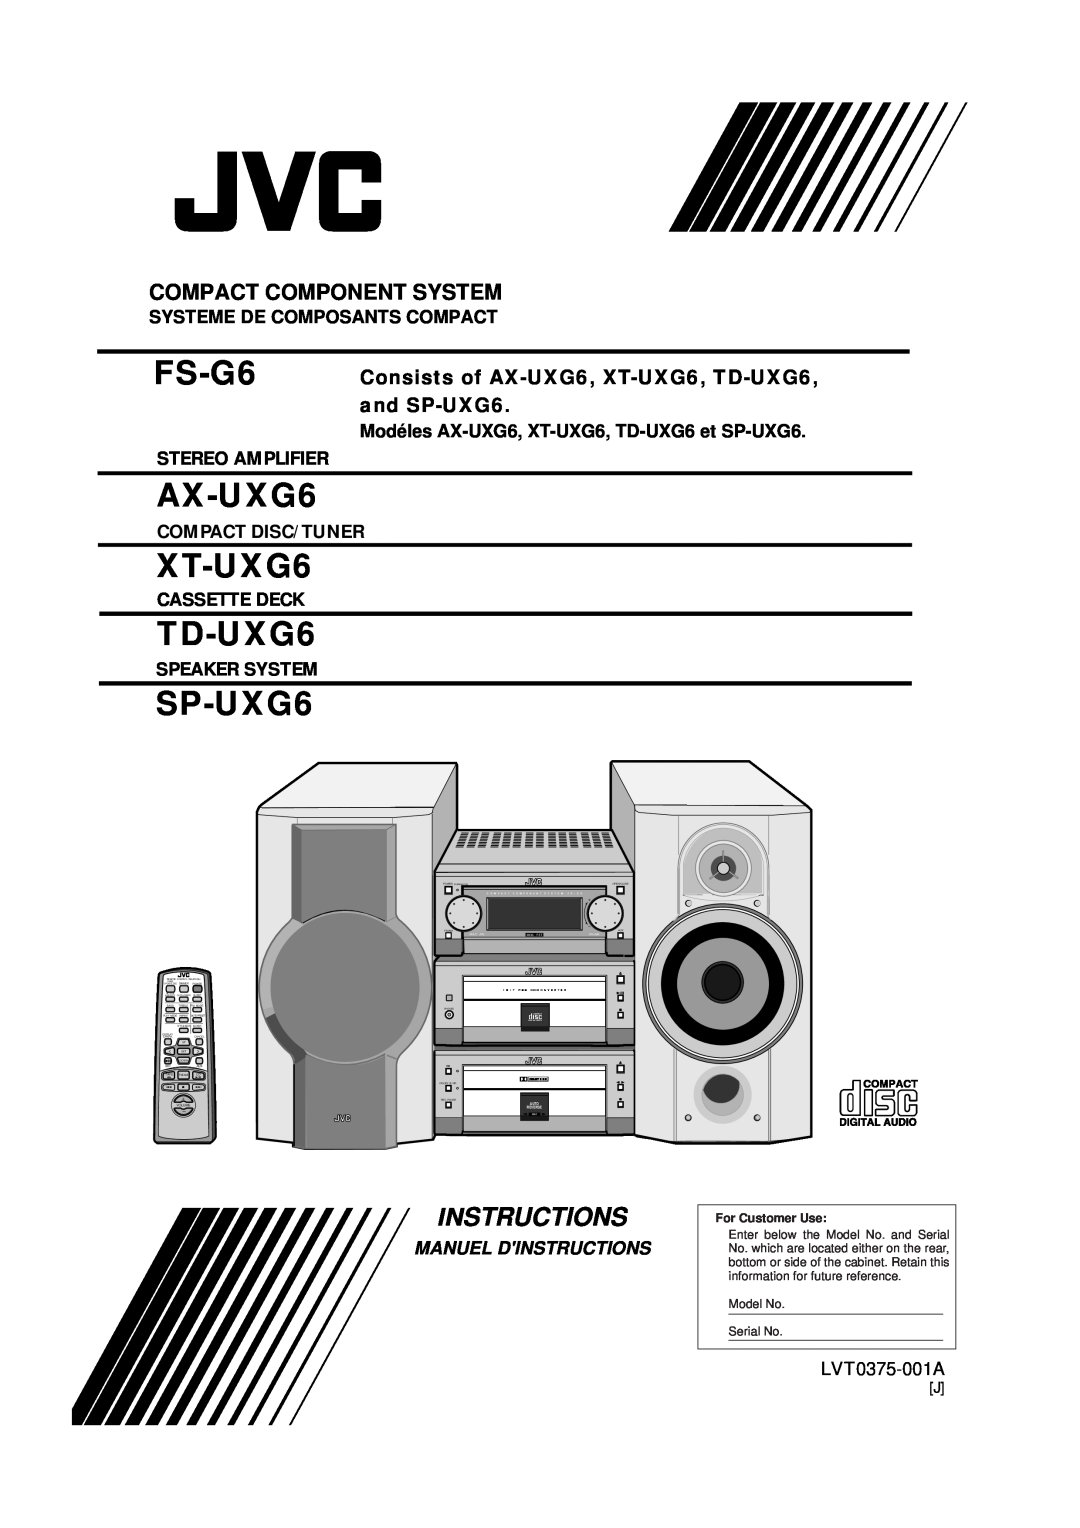 JVC FS-G6 manual Compact Component System, Consists of AX-UXG6, XT-UXG6, TD-UXG6,and SP-UXG6, Manuel Dinstructions, Volume 